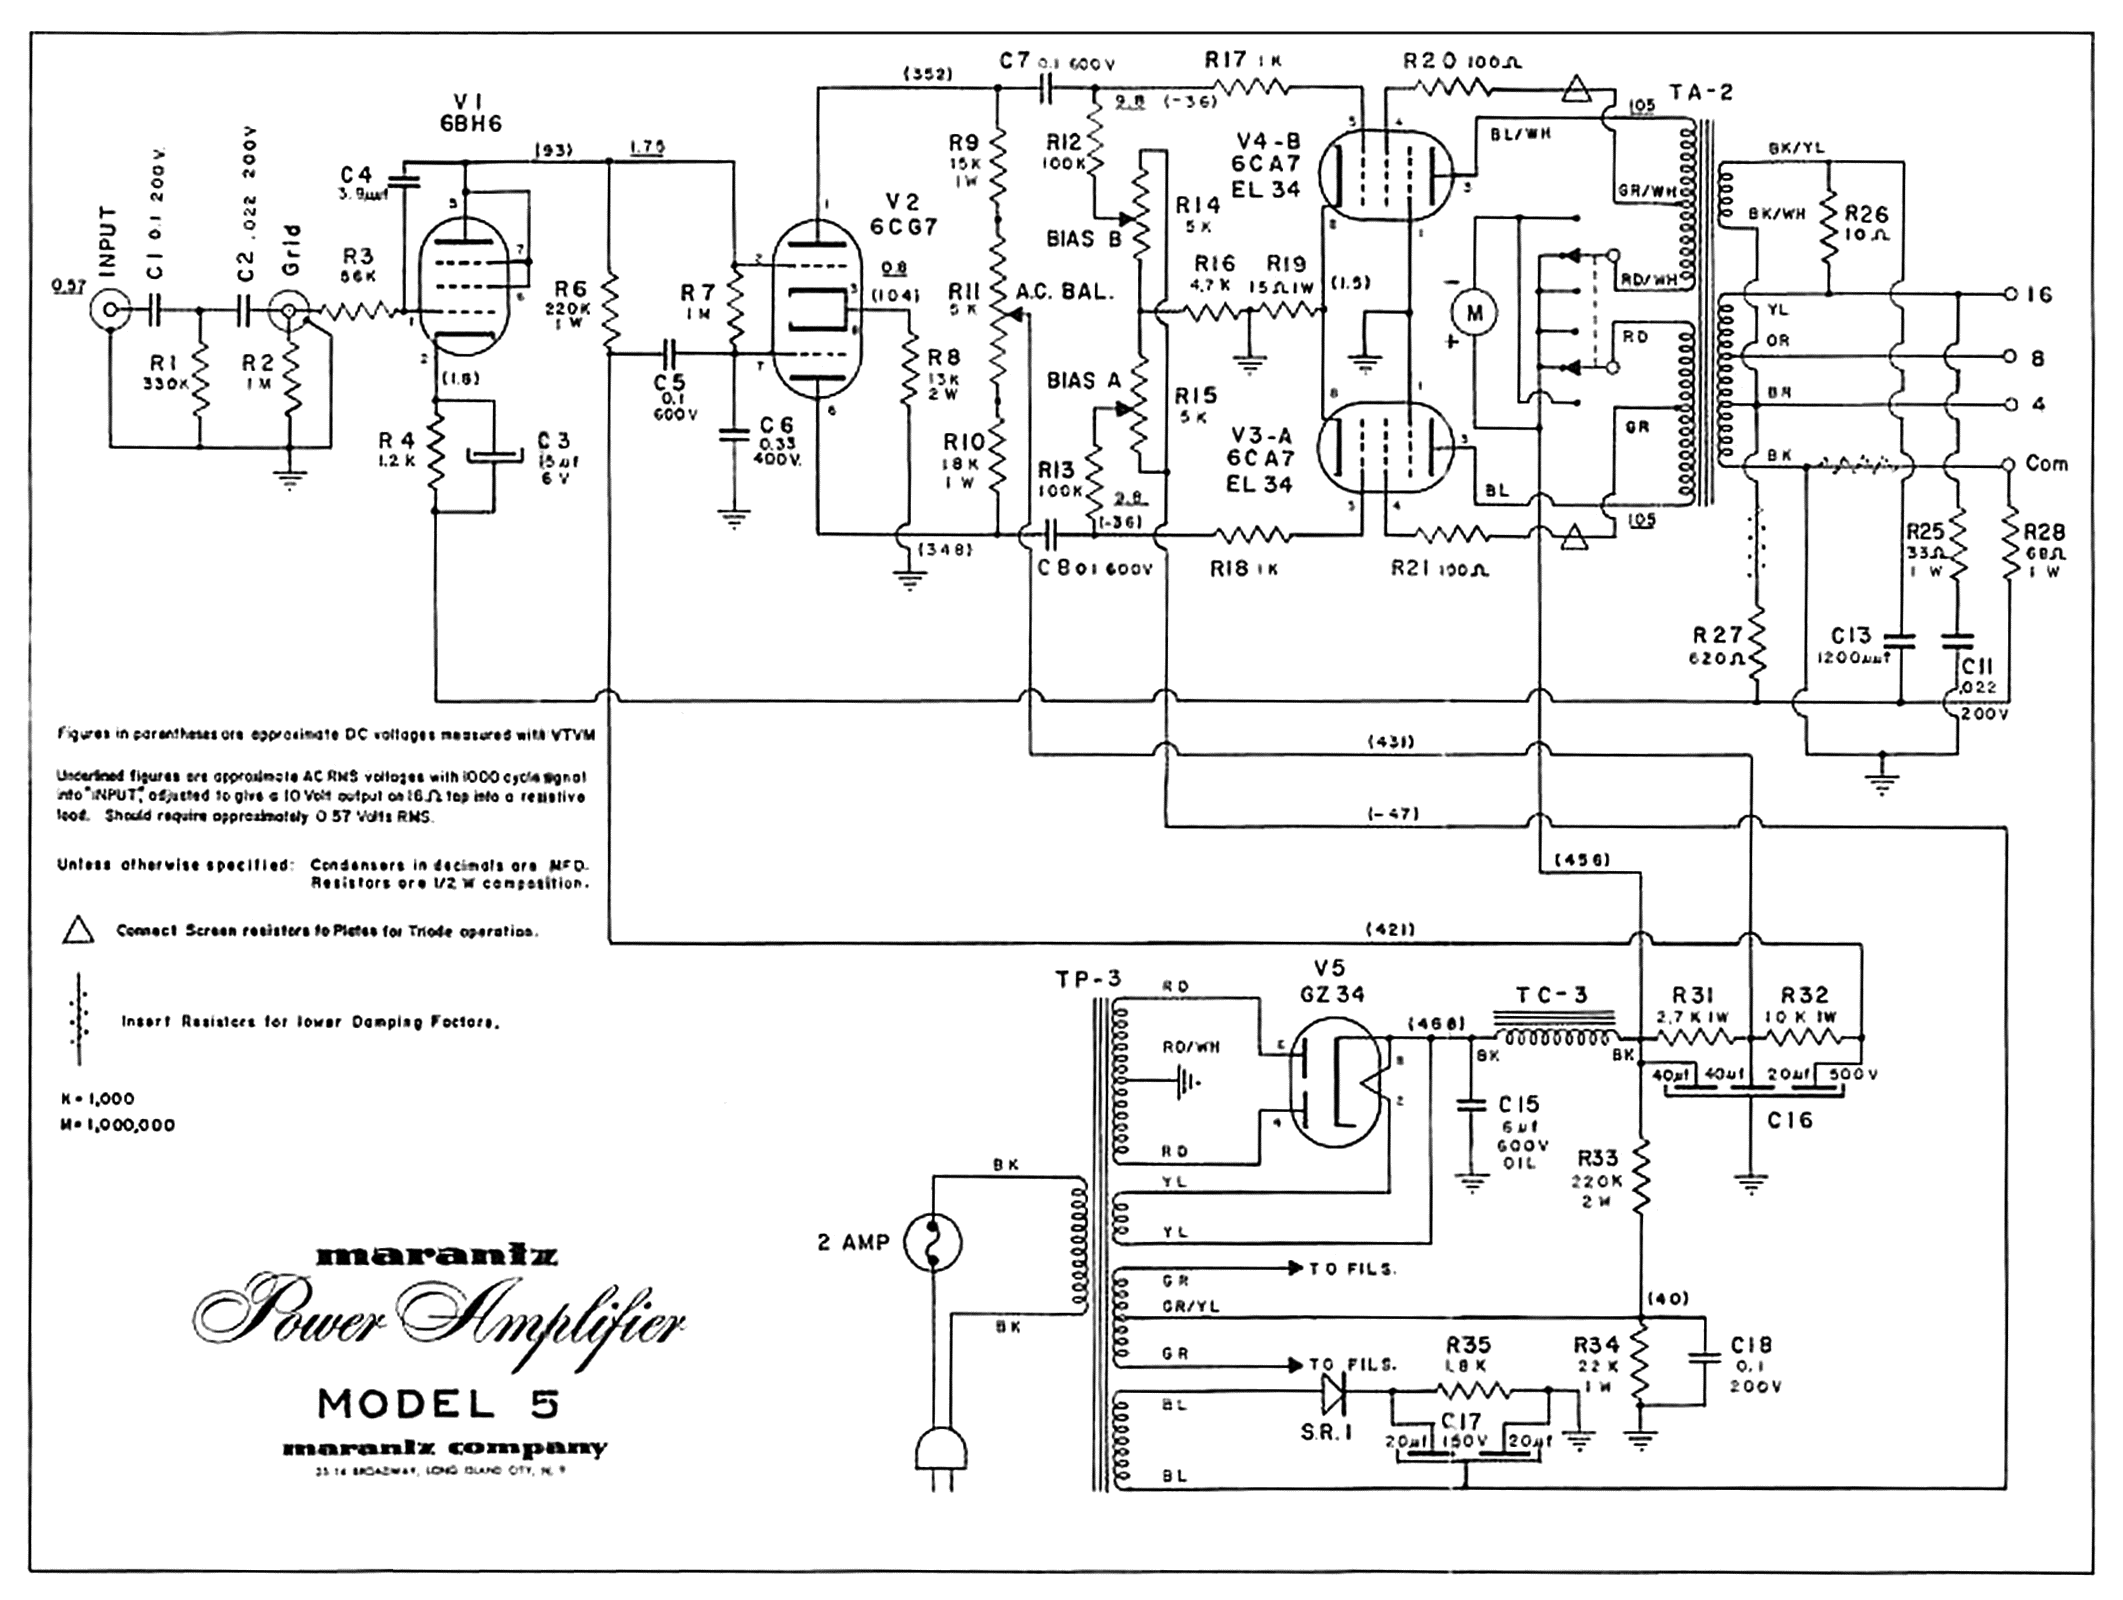 Amp service ru. Двухтактный ламповый усилитель el34. Marantz model 5 schematic. Усилитель на el34 двухтактный. Схемы двухтактных ламповых усилителей на el34.